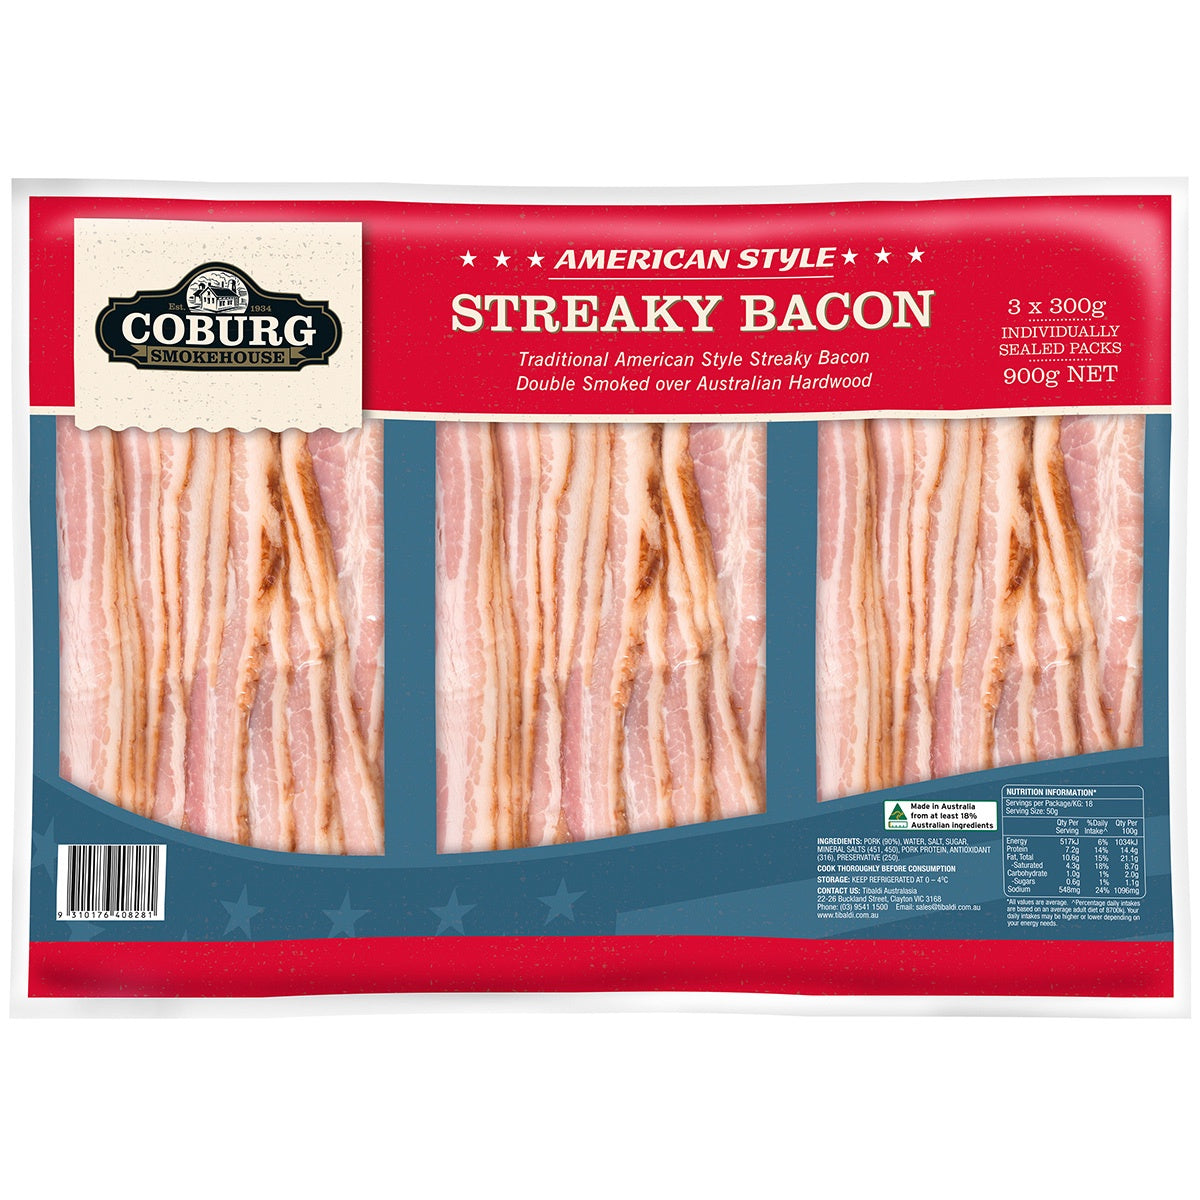 Coburg Streaky Bacon 900g